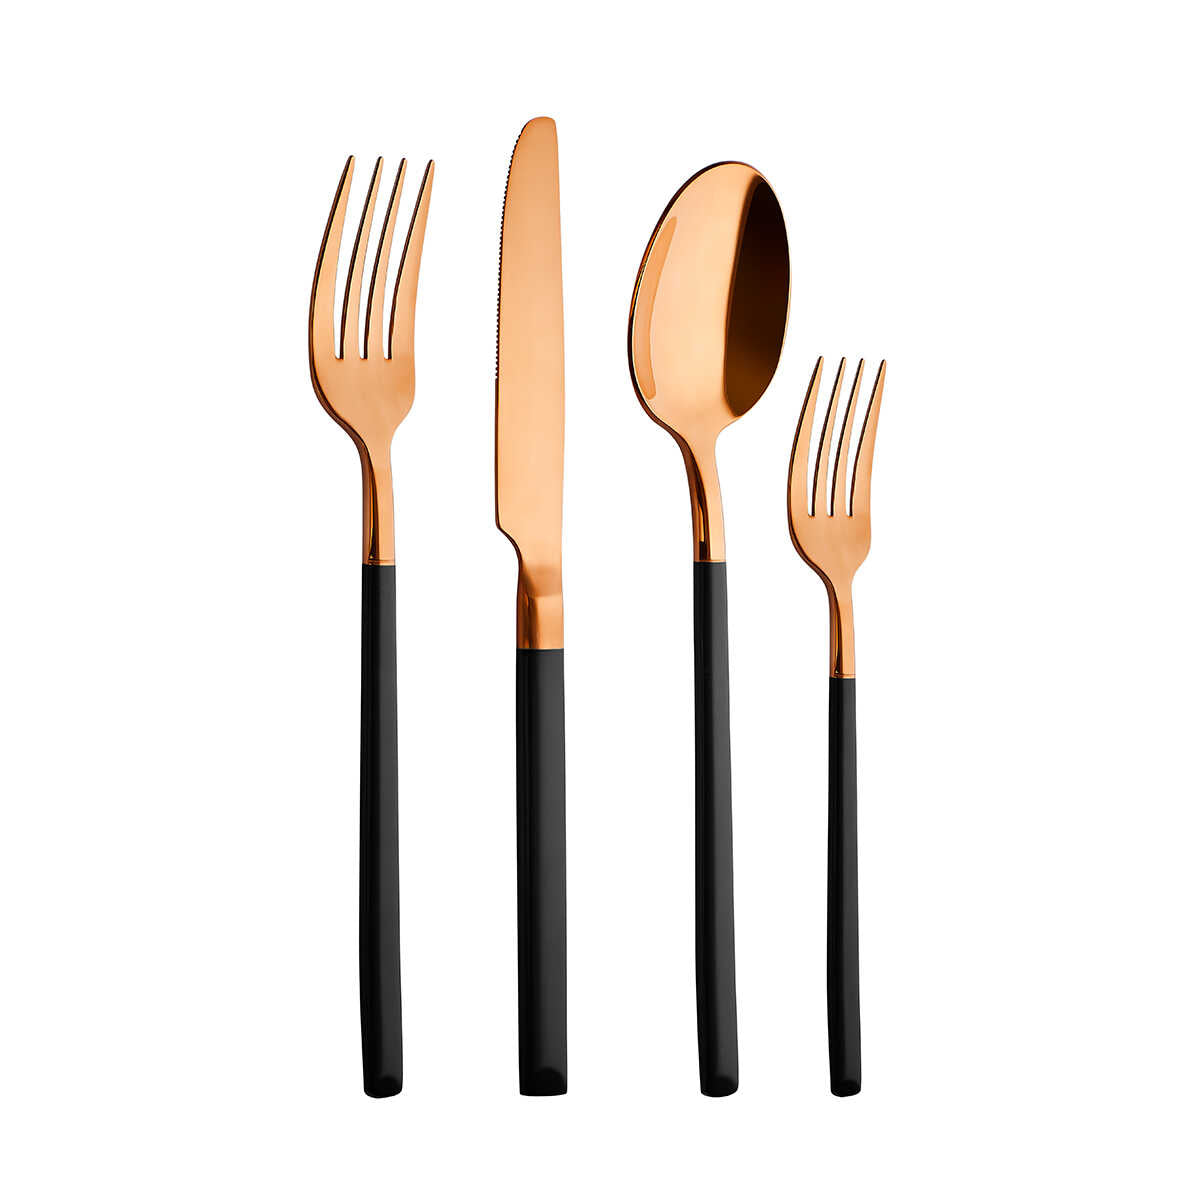 Aryıldız Soho Prestige Bronze Black Fork Spoon Knife 24 Pieces